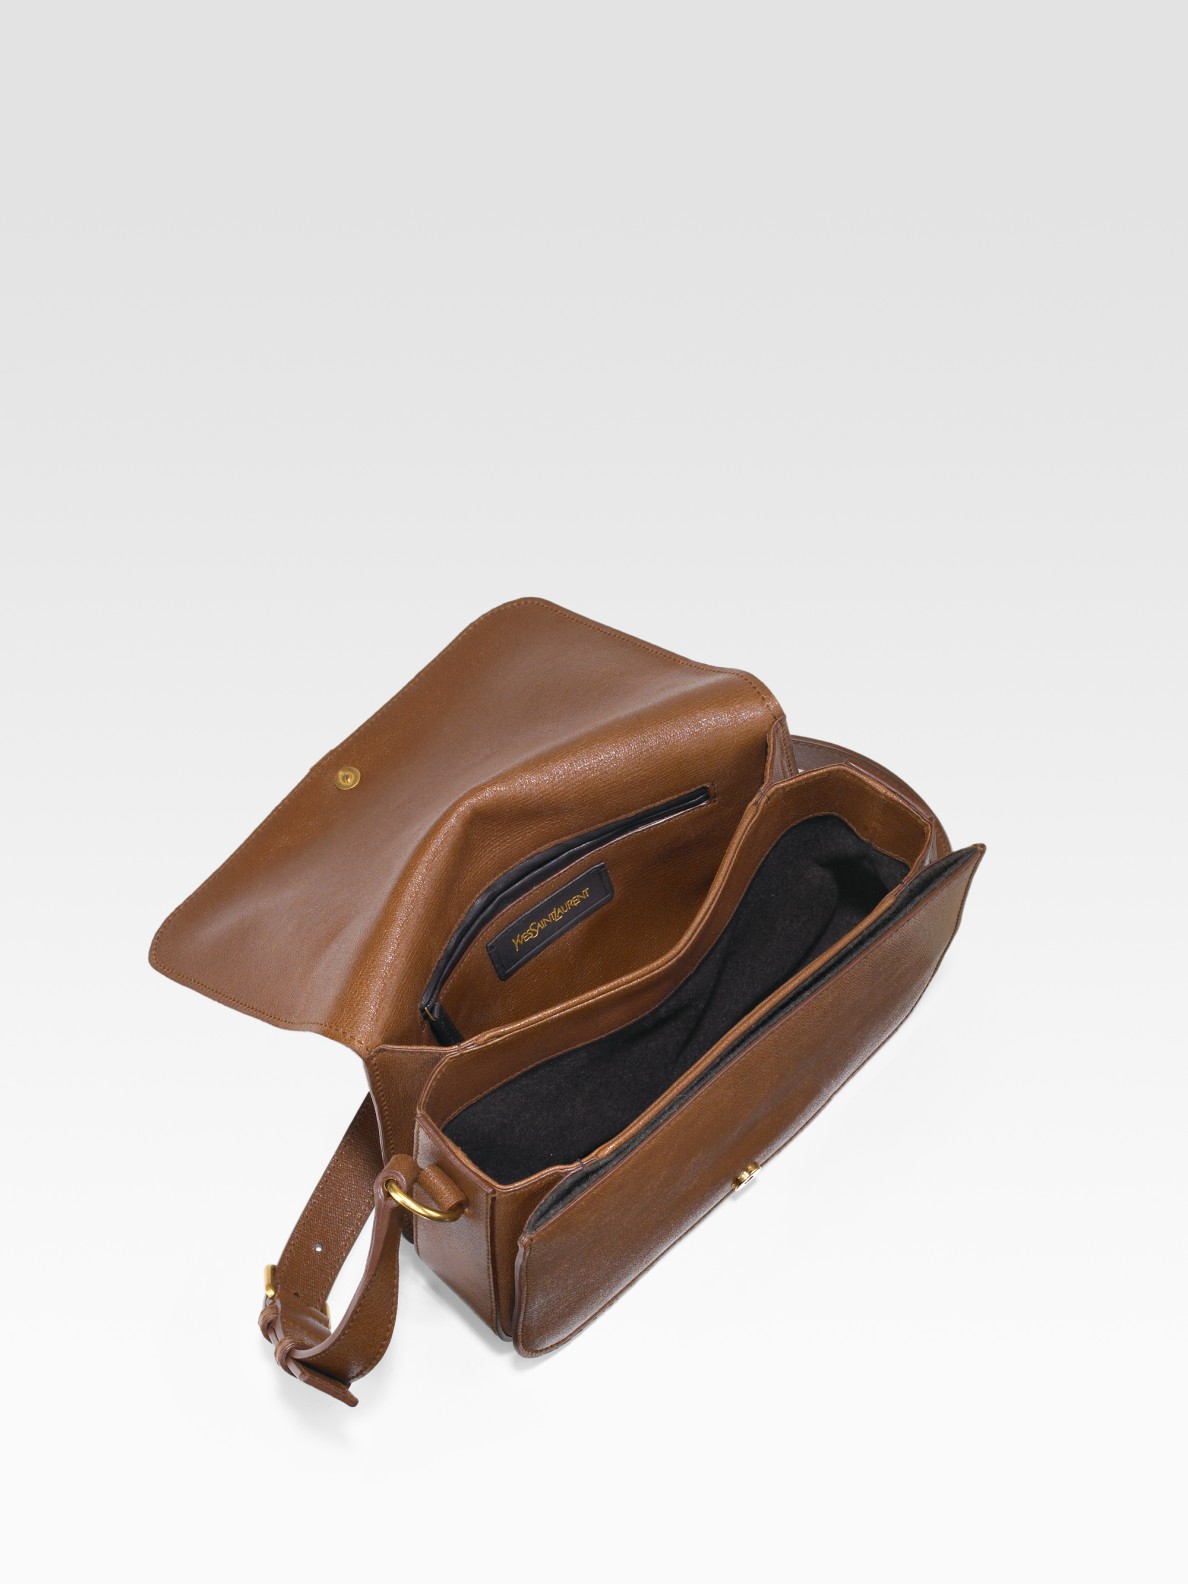 Lyst - Saint laurent Chyc Mini Tweed Ranch Shoulder Bag in Brown